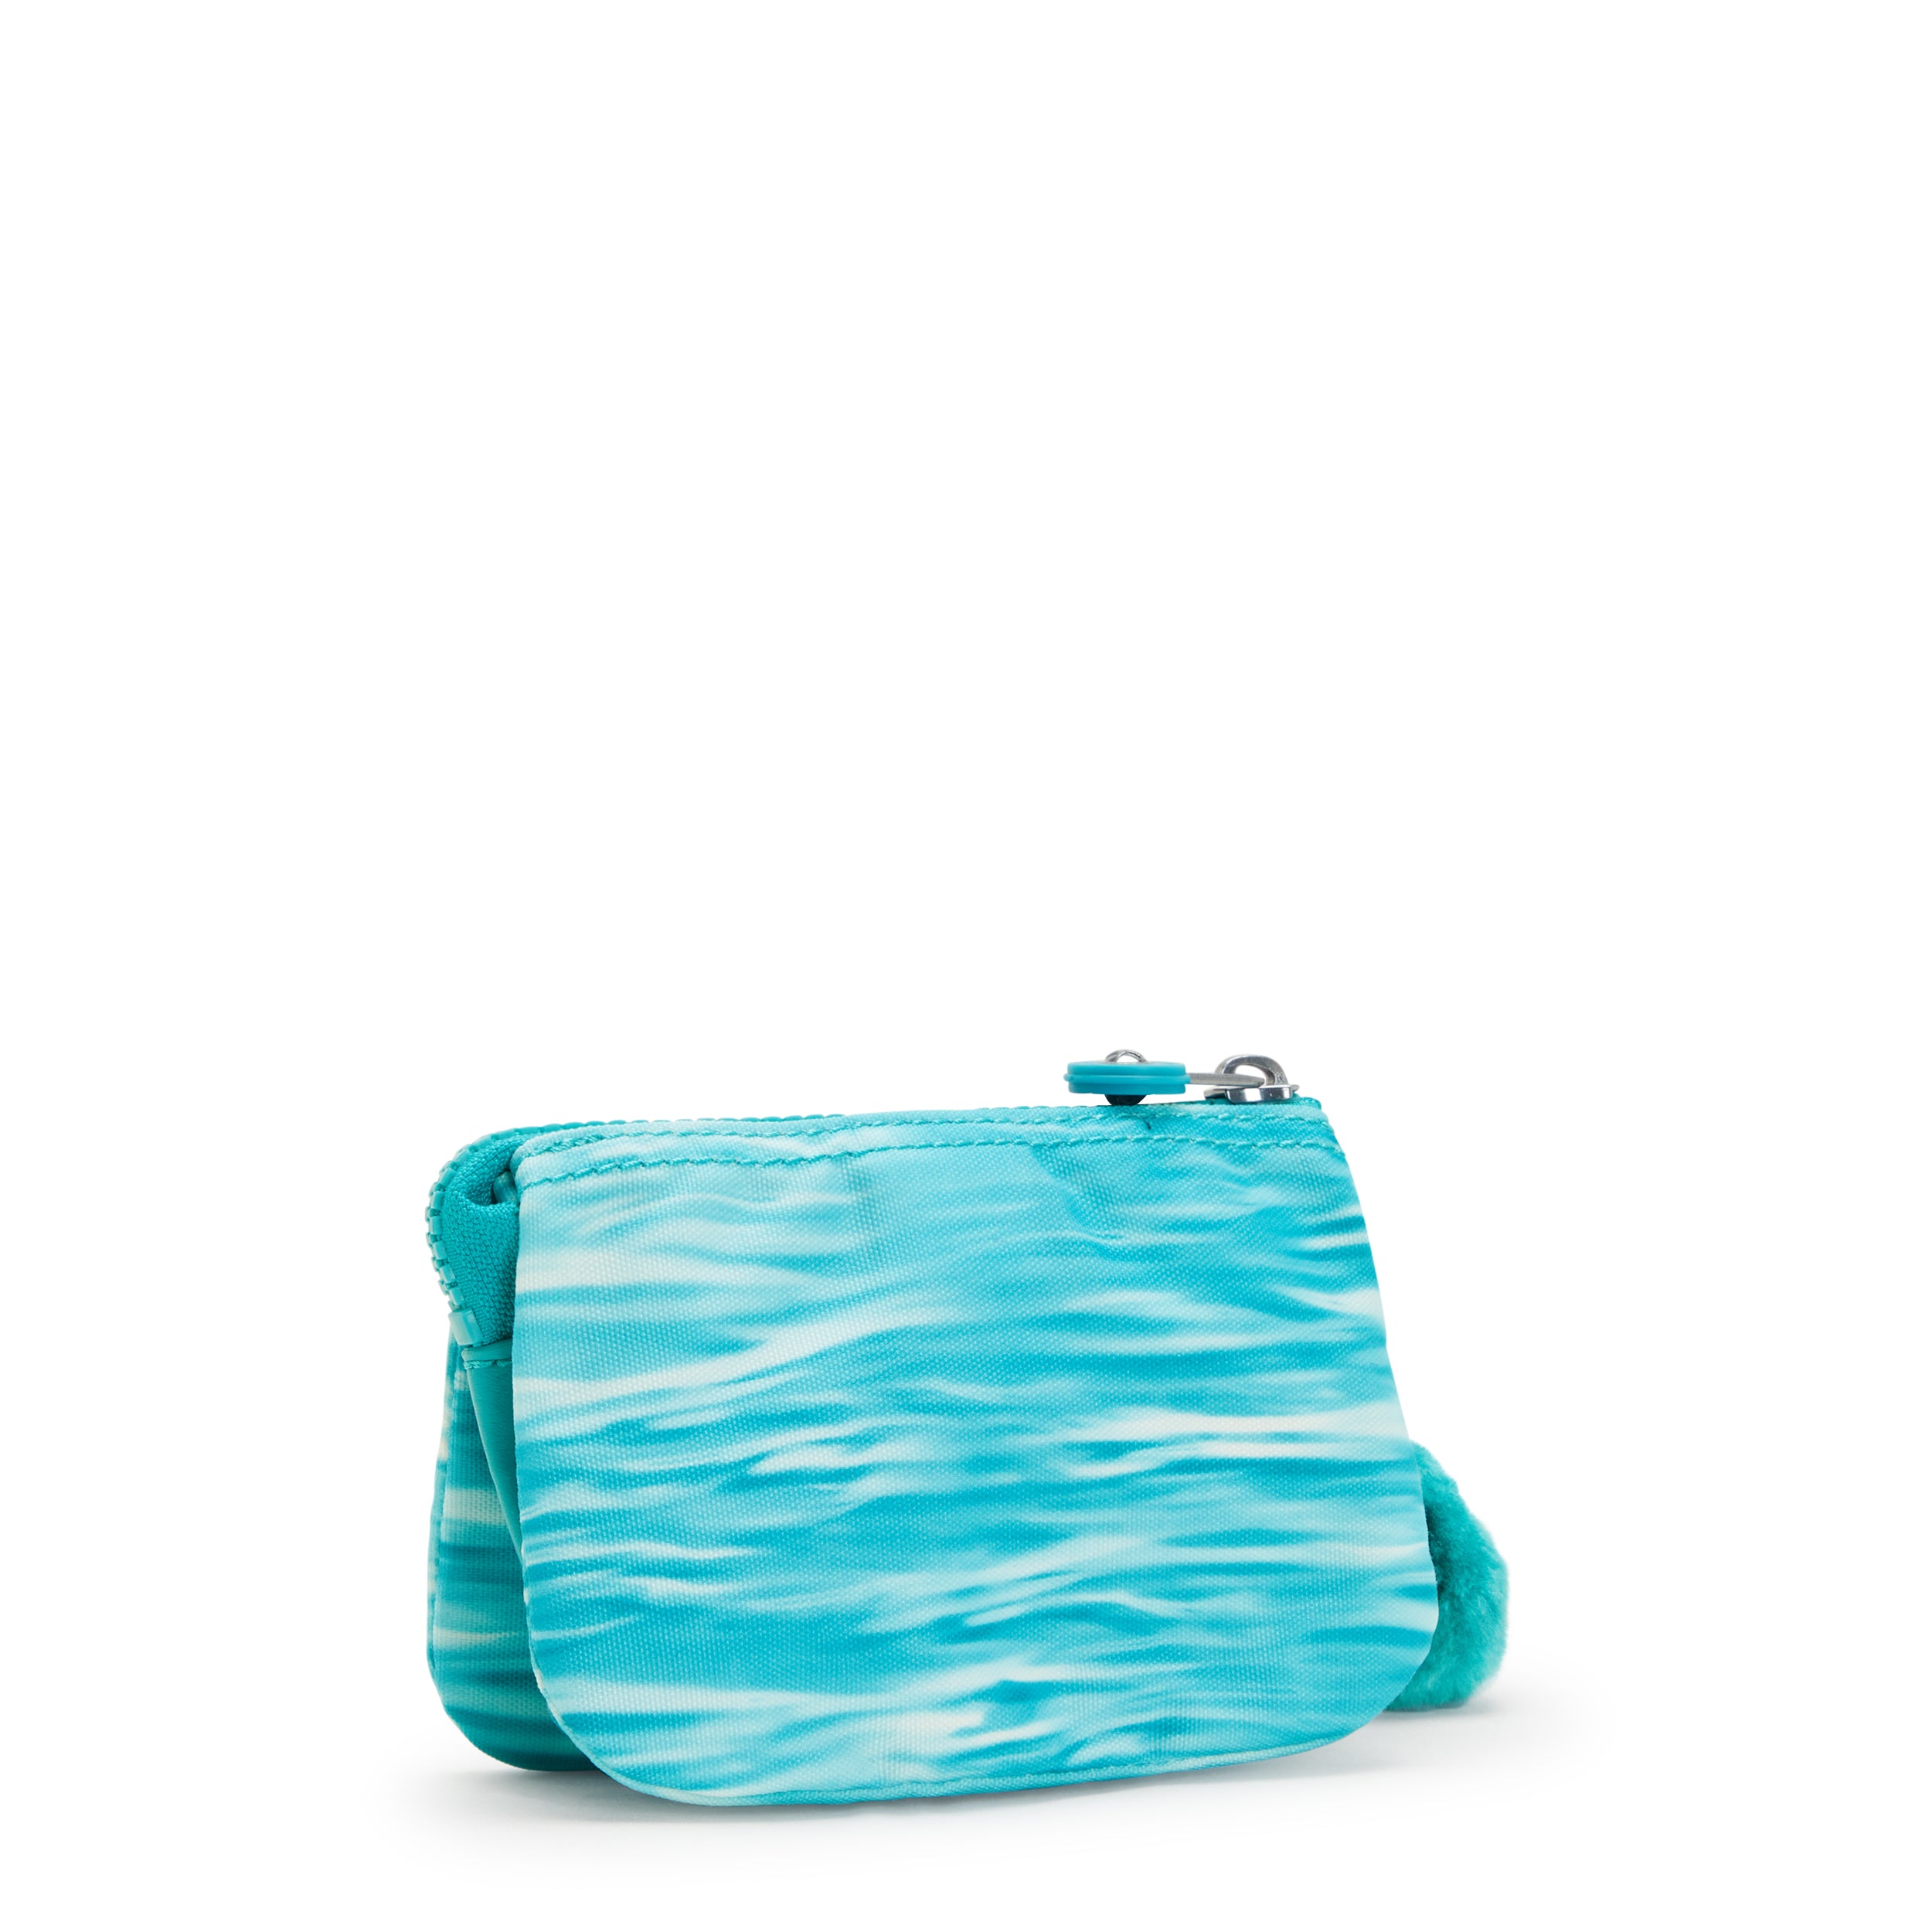 KIPLING-Creativity S-Small purse-Aqua Pool-I5159-5MF